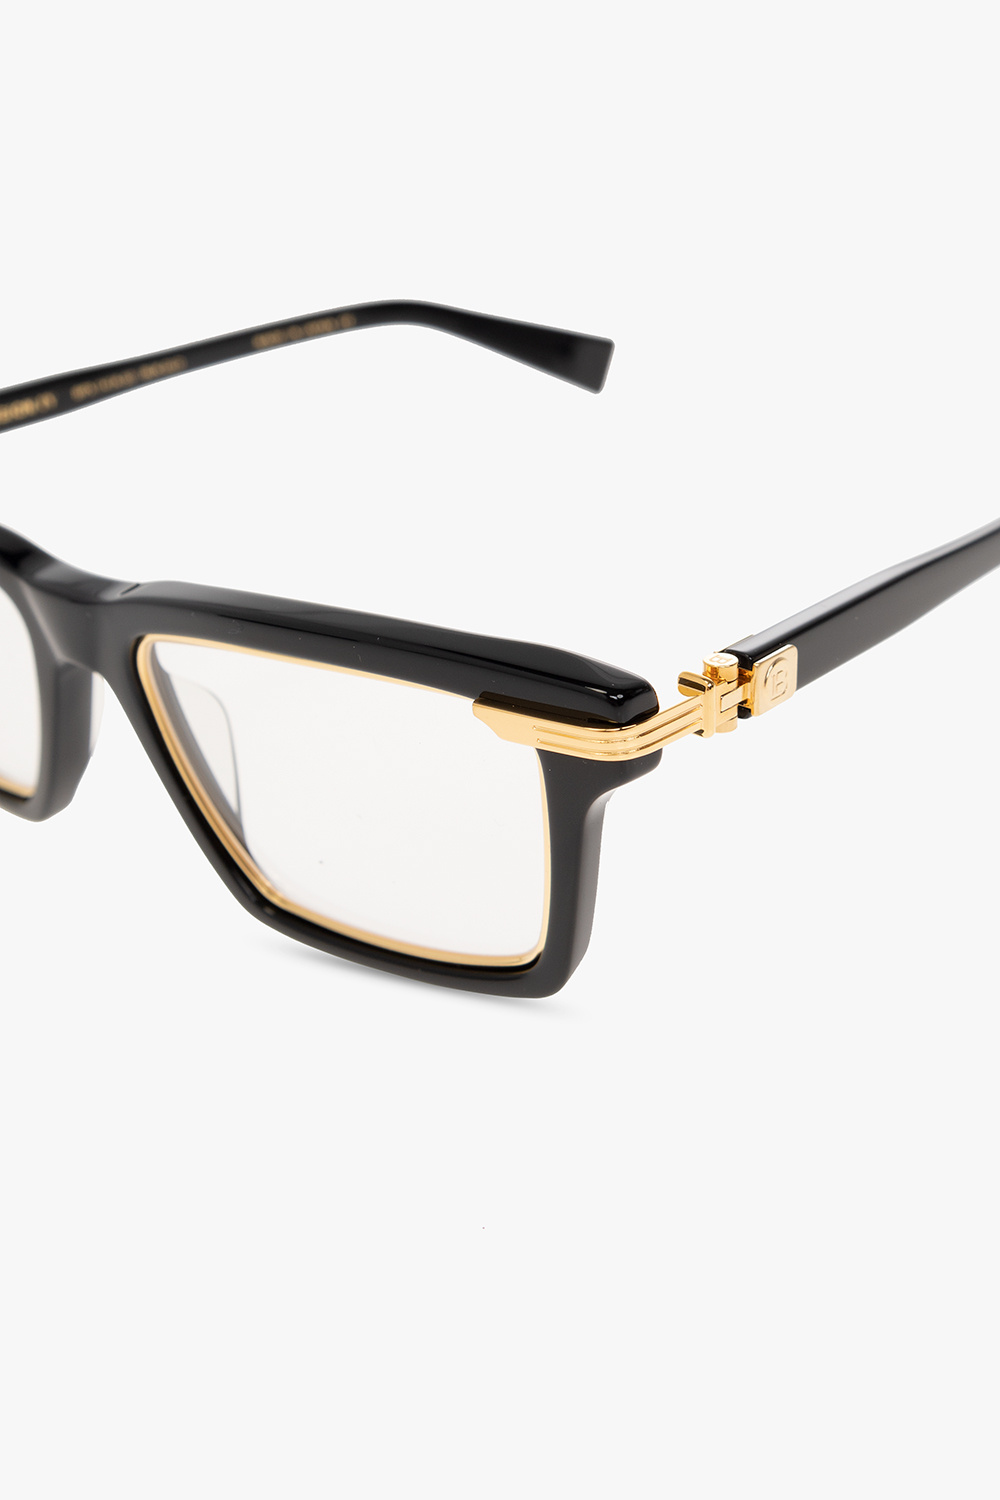 Balmain ‘Legion IV’ optical glasses